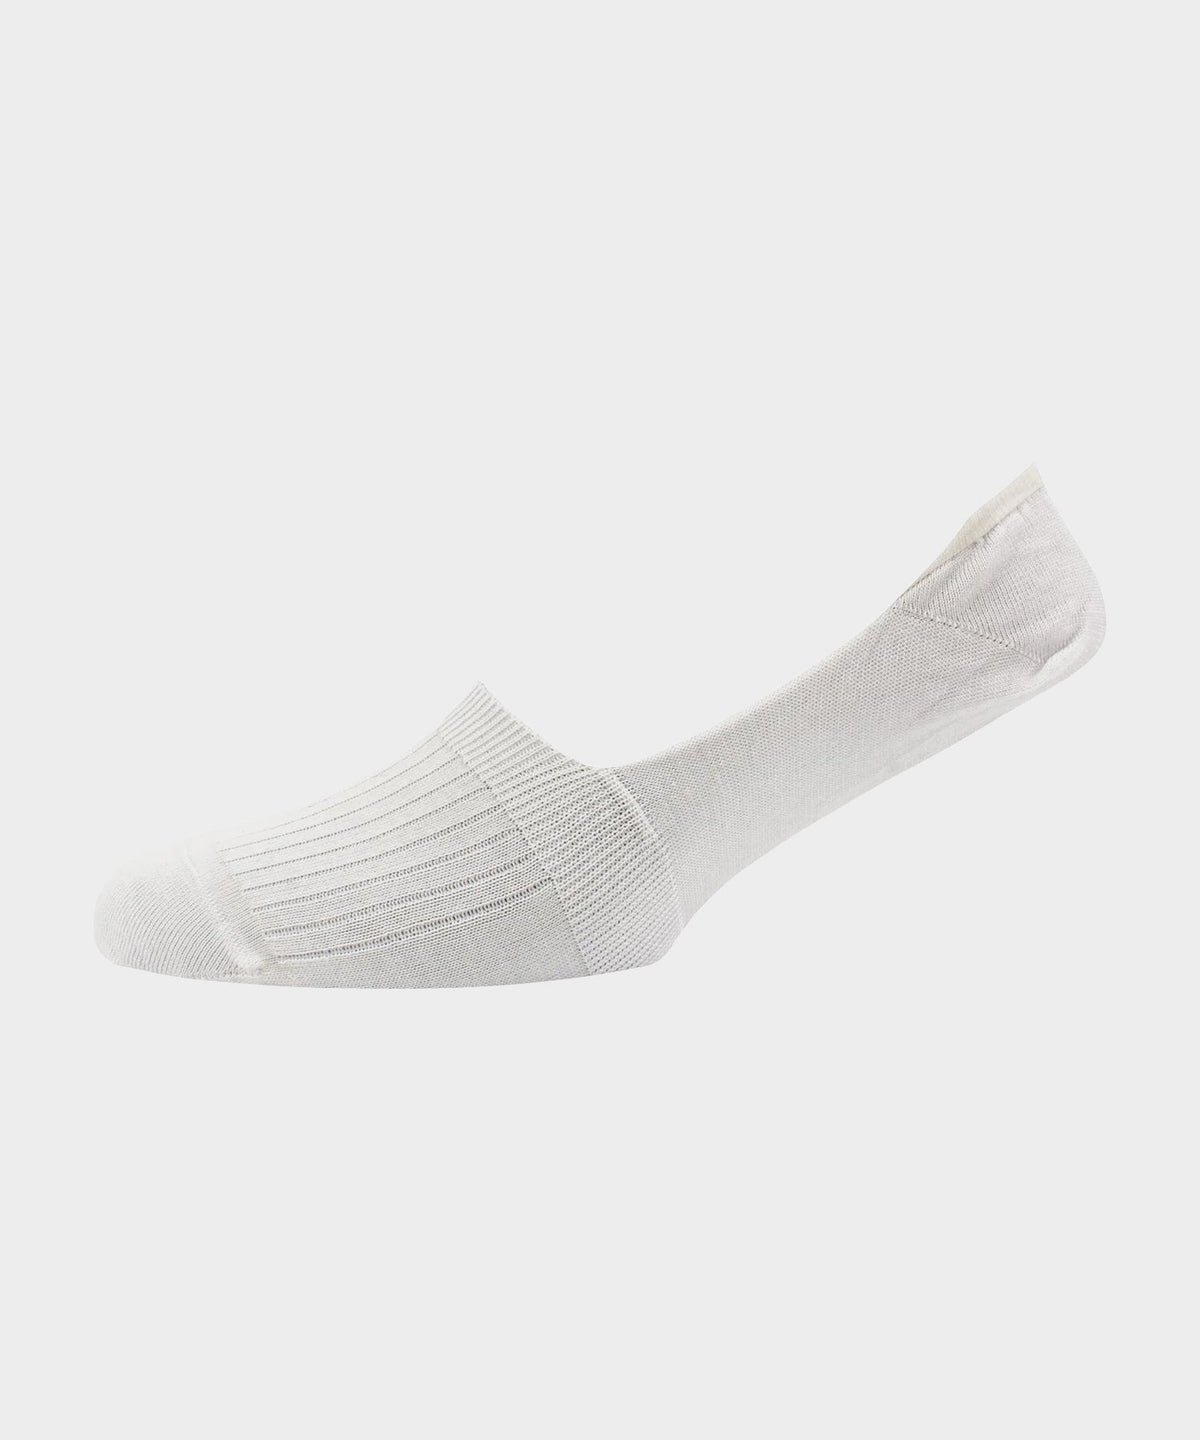 Corgi Rib Mercerized Cotton Invisible Sock in White